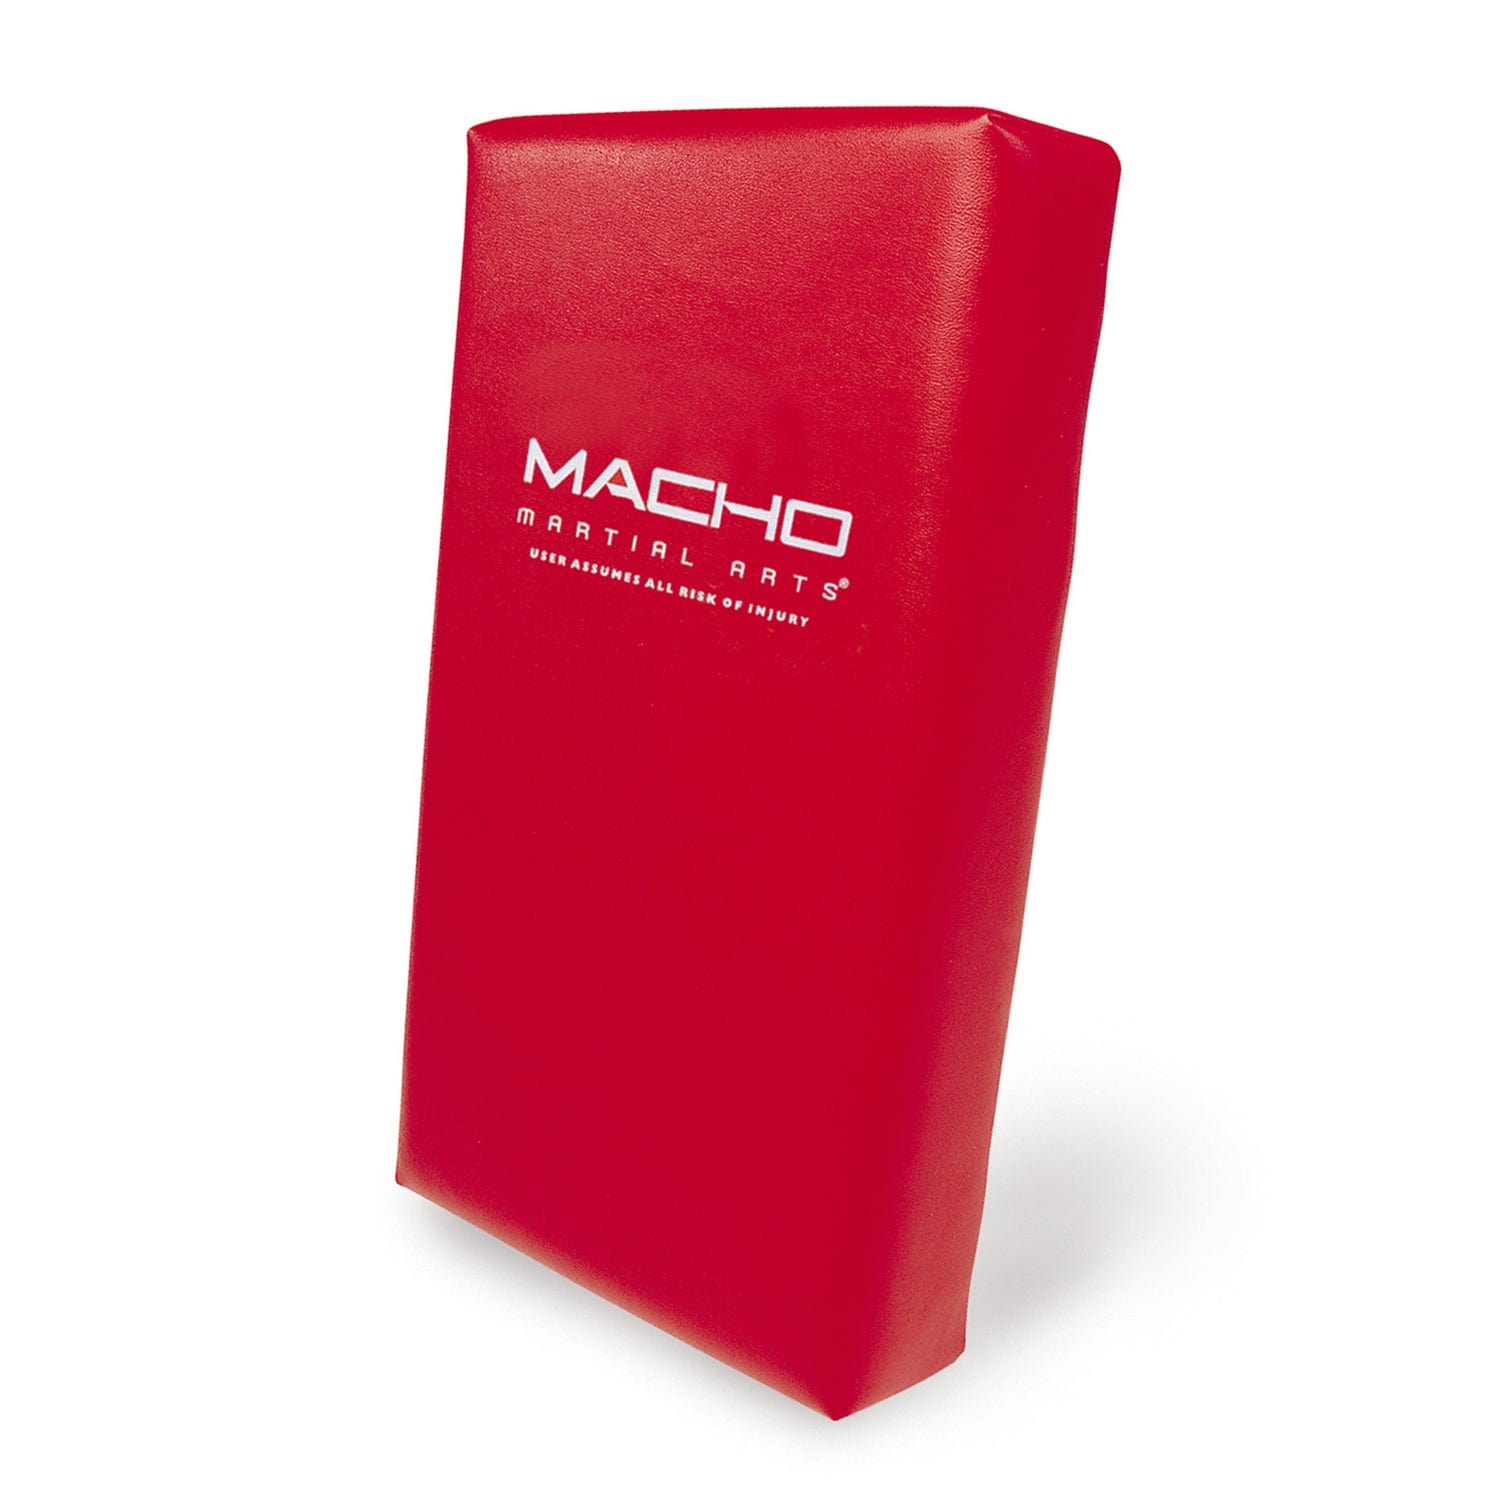 Macho sporting goods Macho Kid's Kicking Focus Target Shield kicking shield